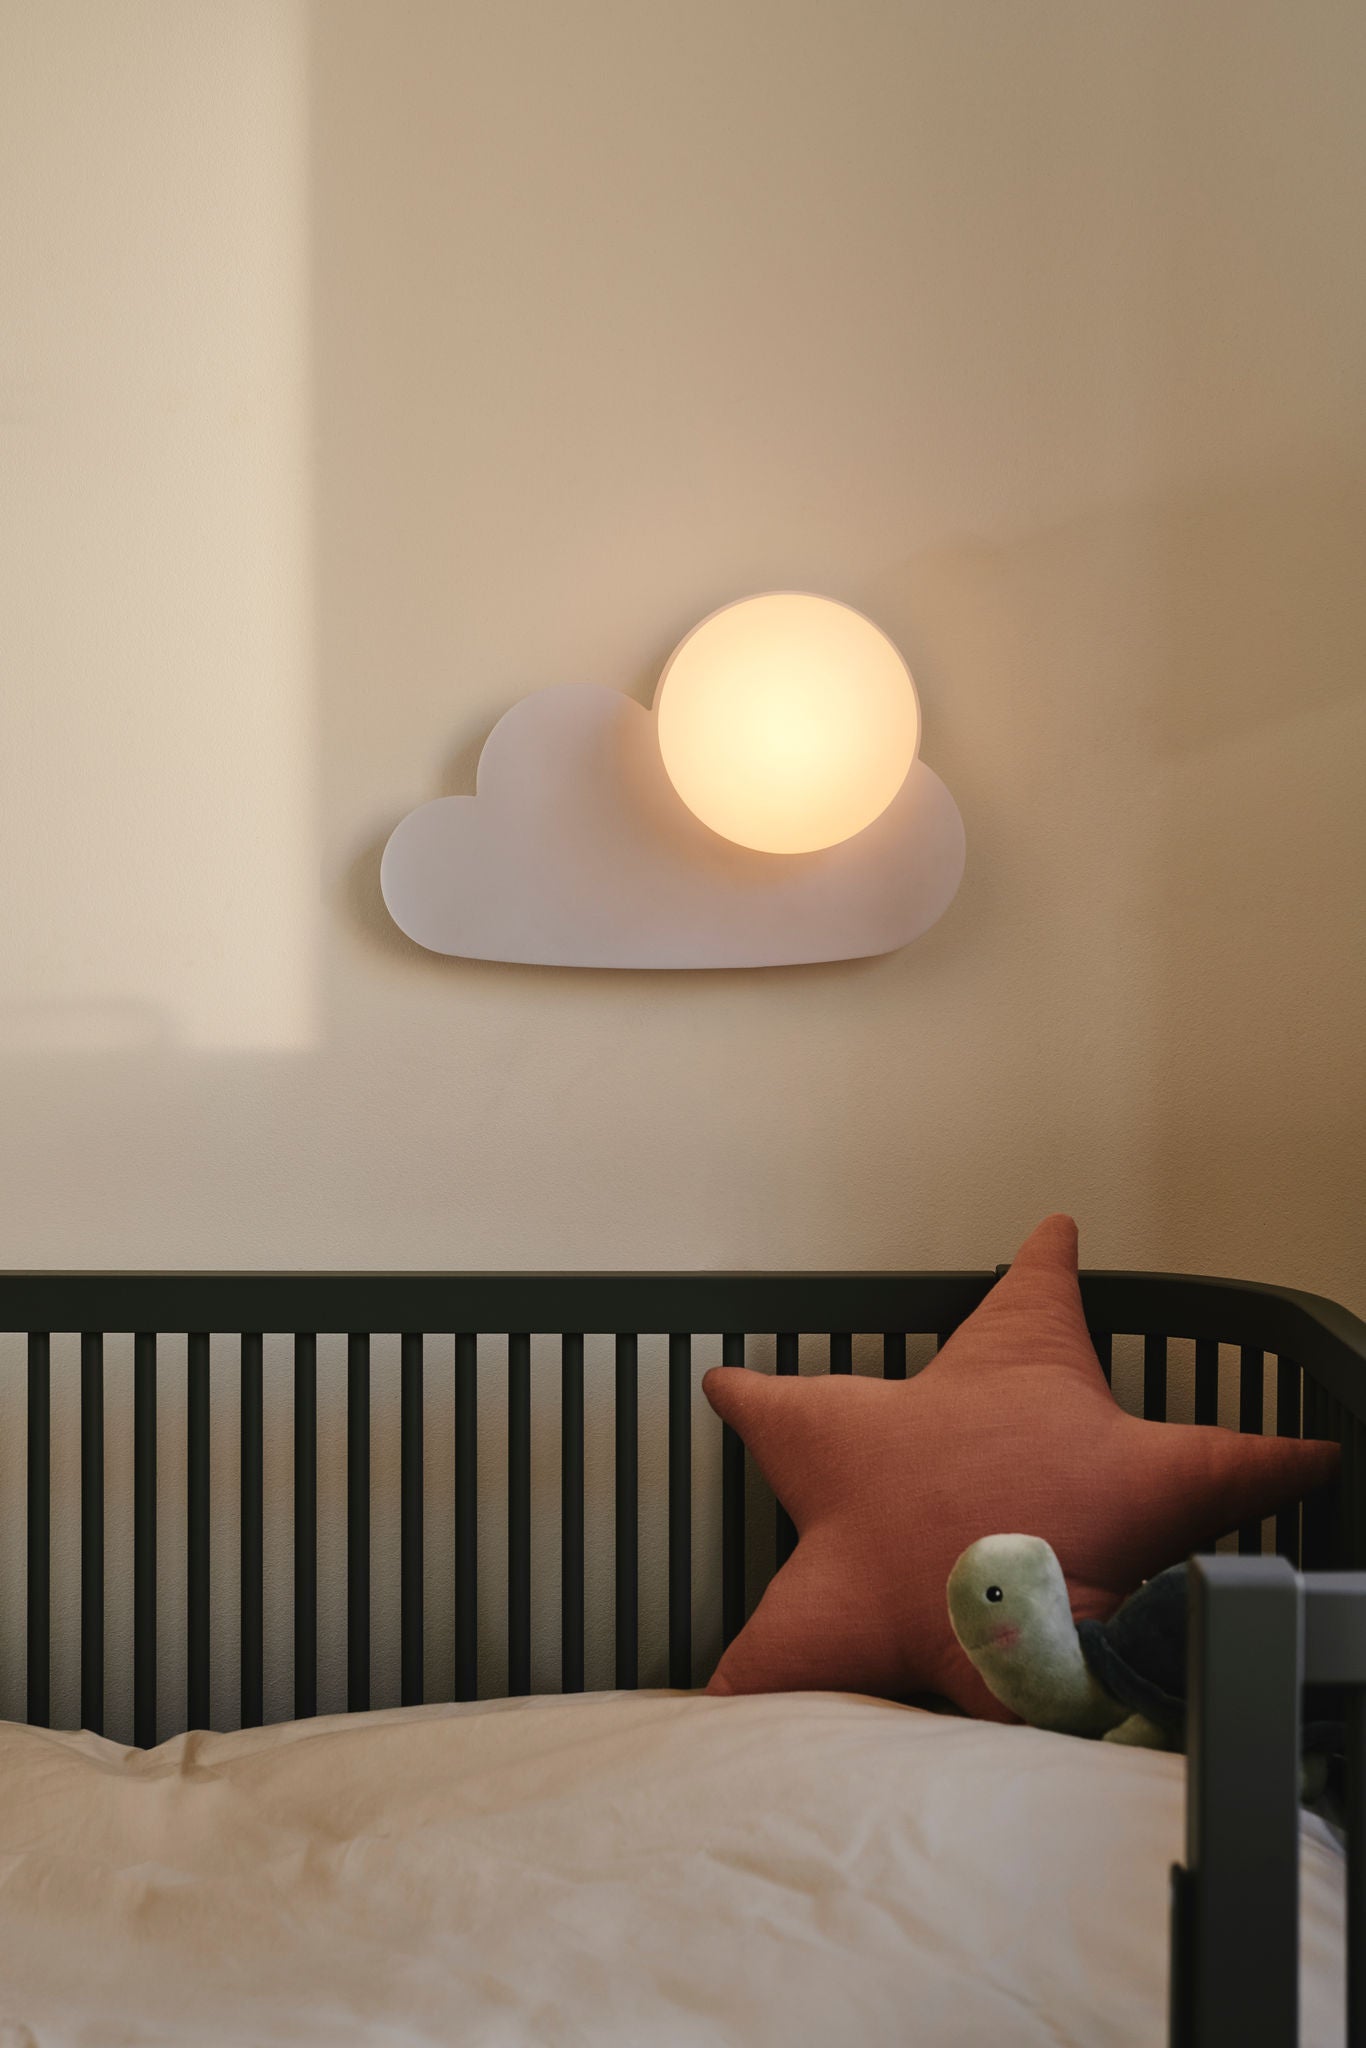 Skyku Cloud | Væglampe | Hvid